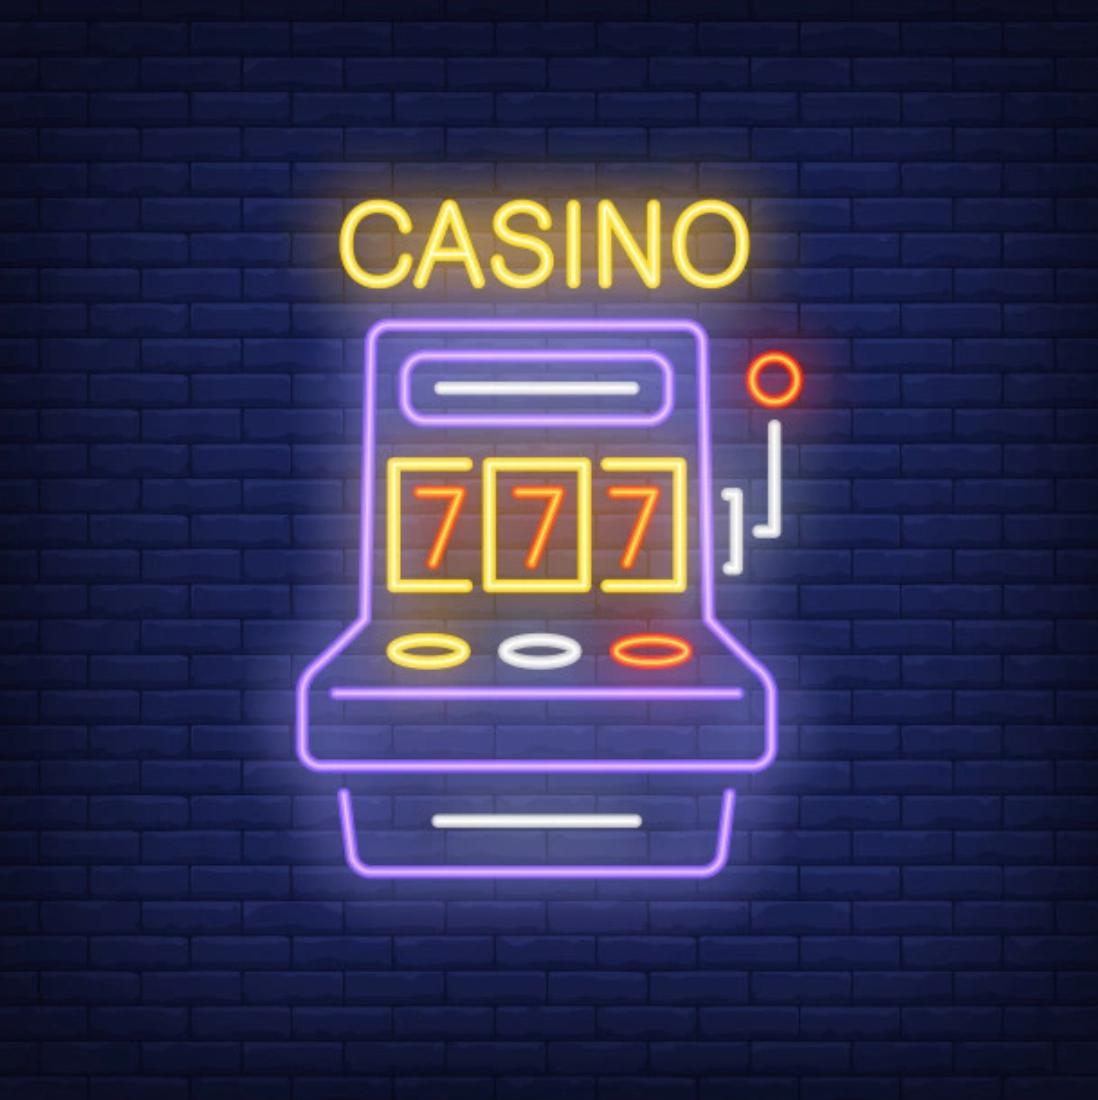 Casino Slot lights